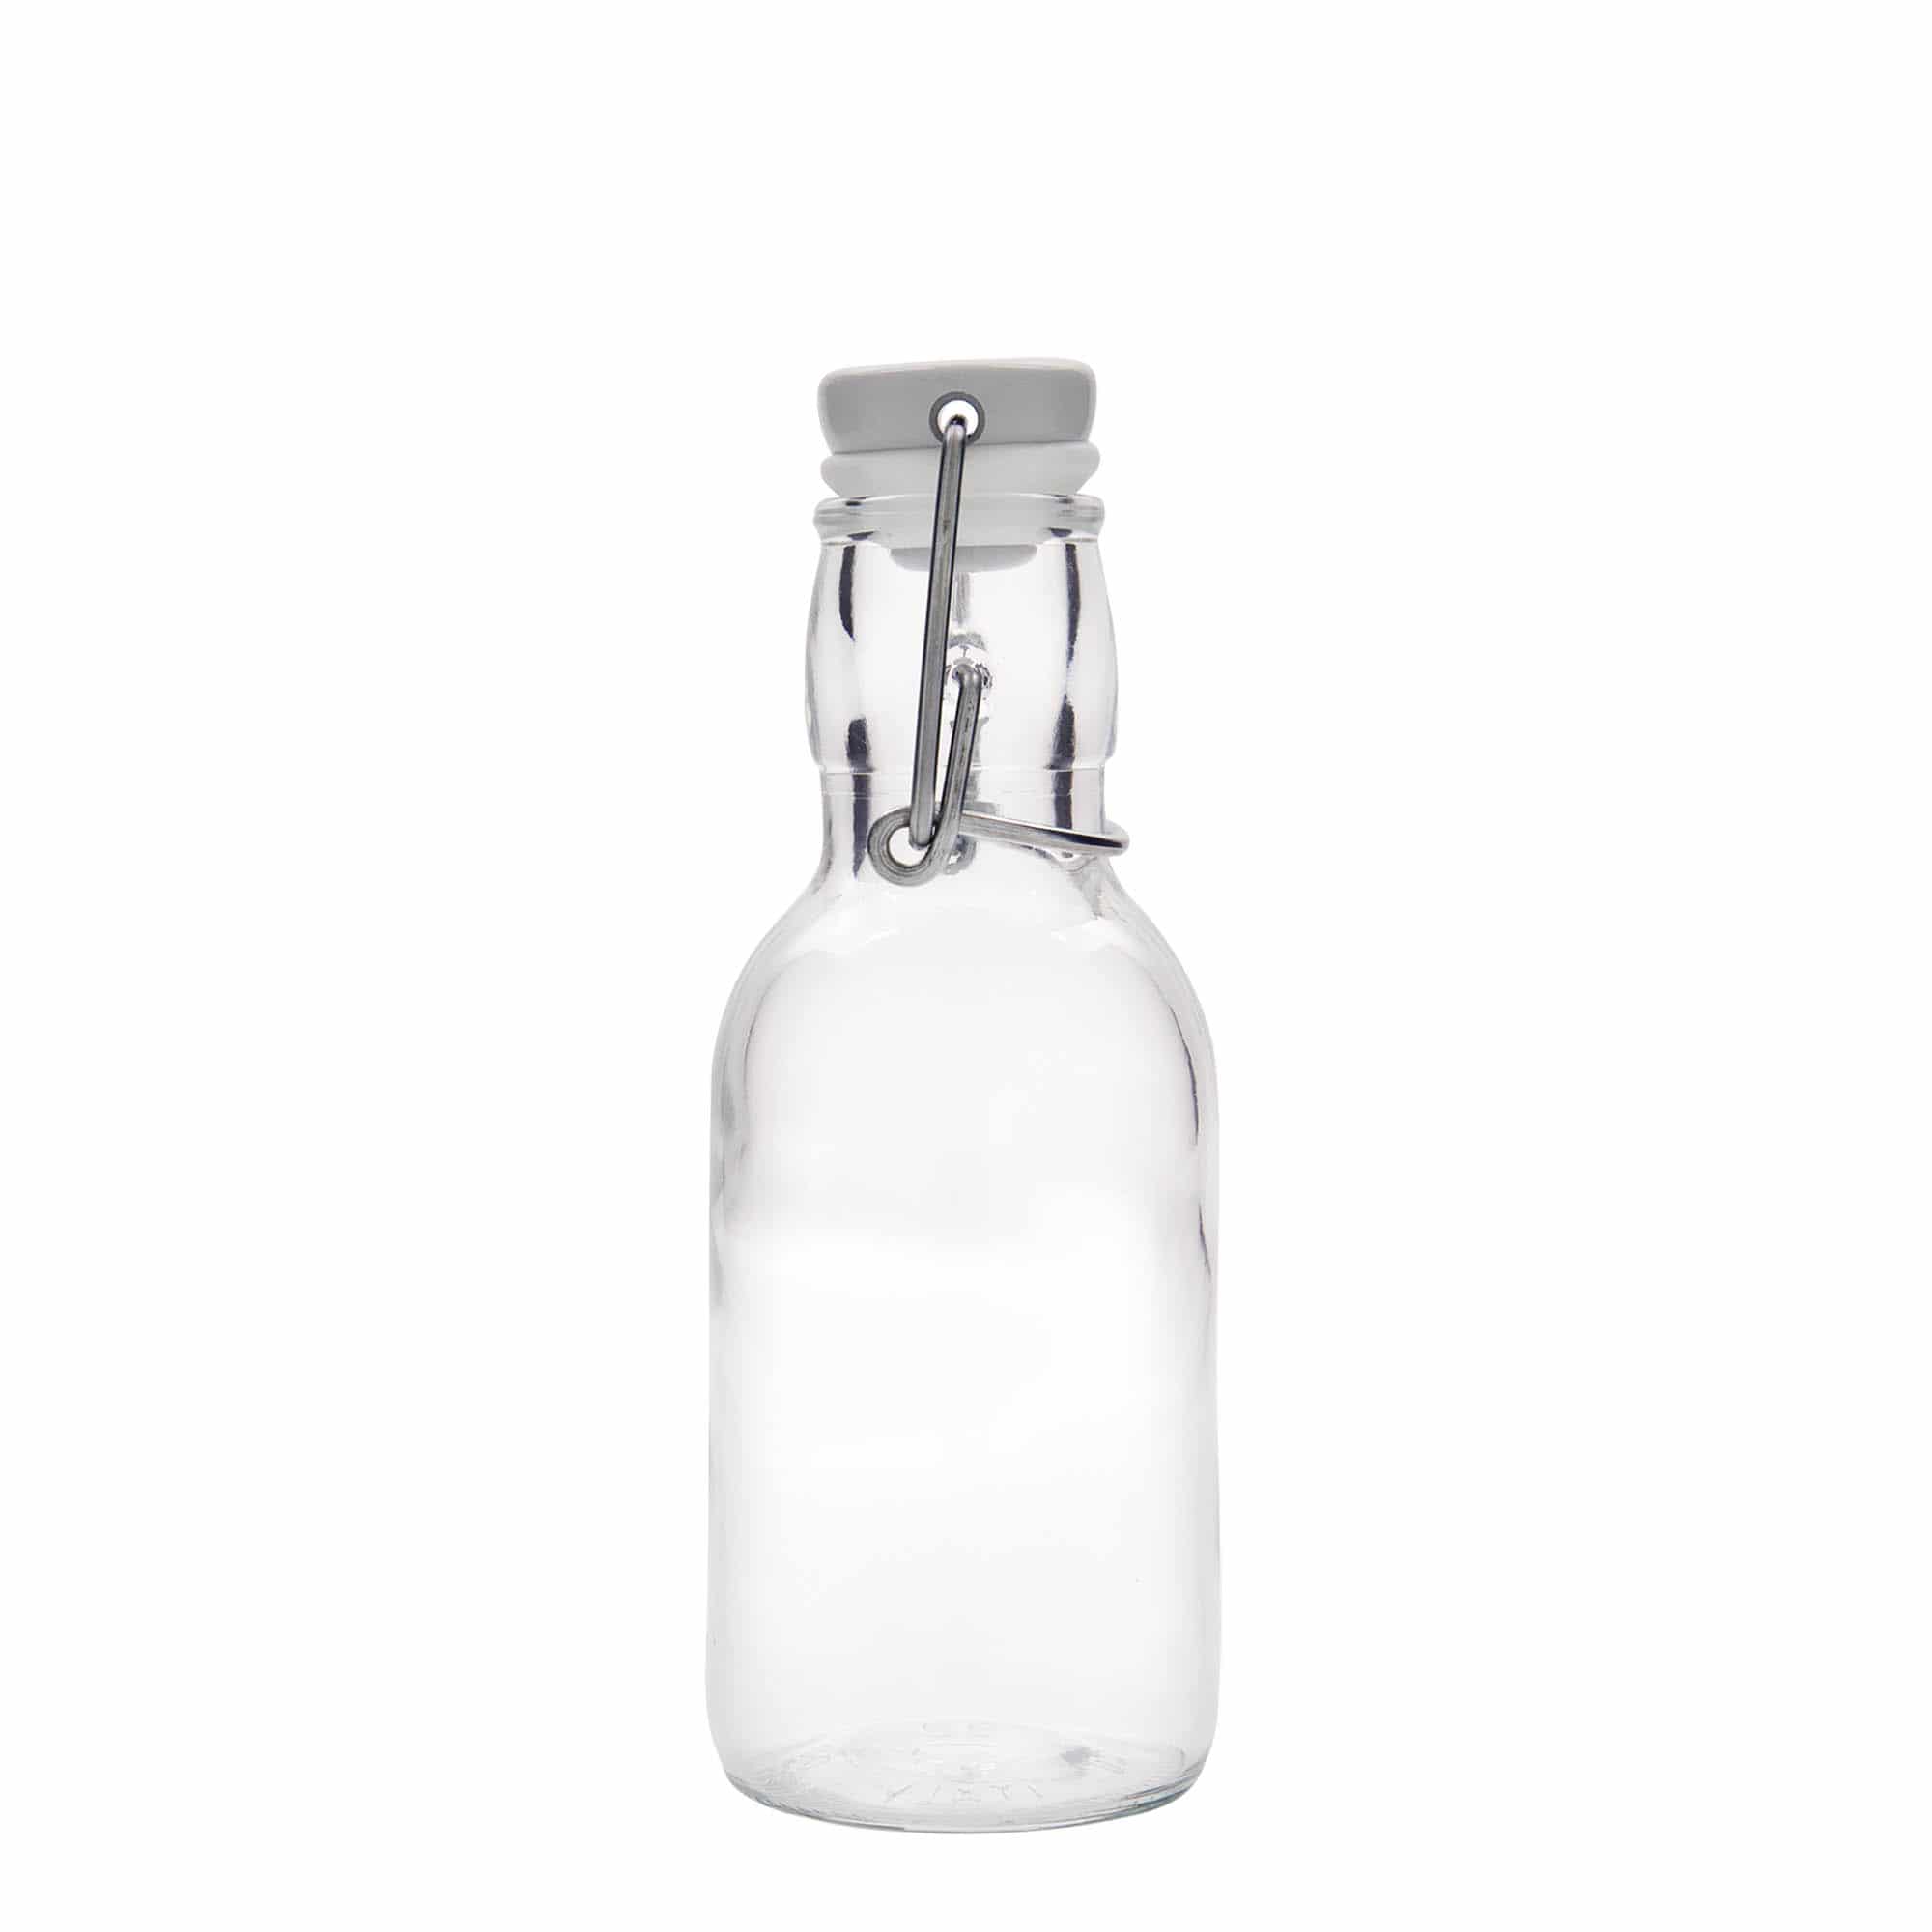 250 ml glass bottle 'Emilia', closure: swing top